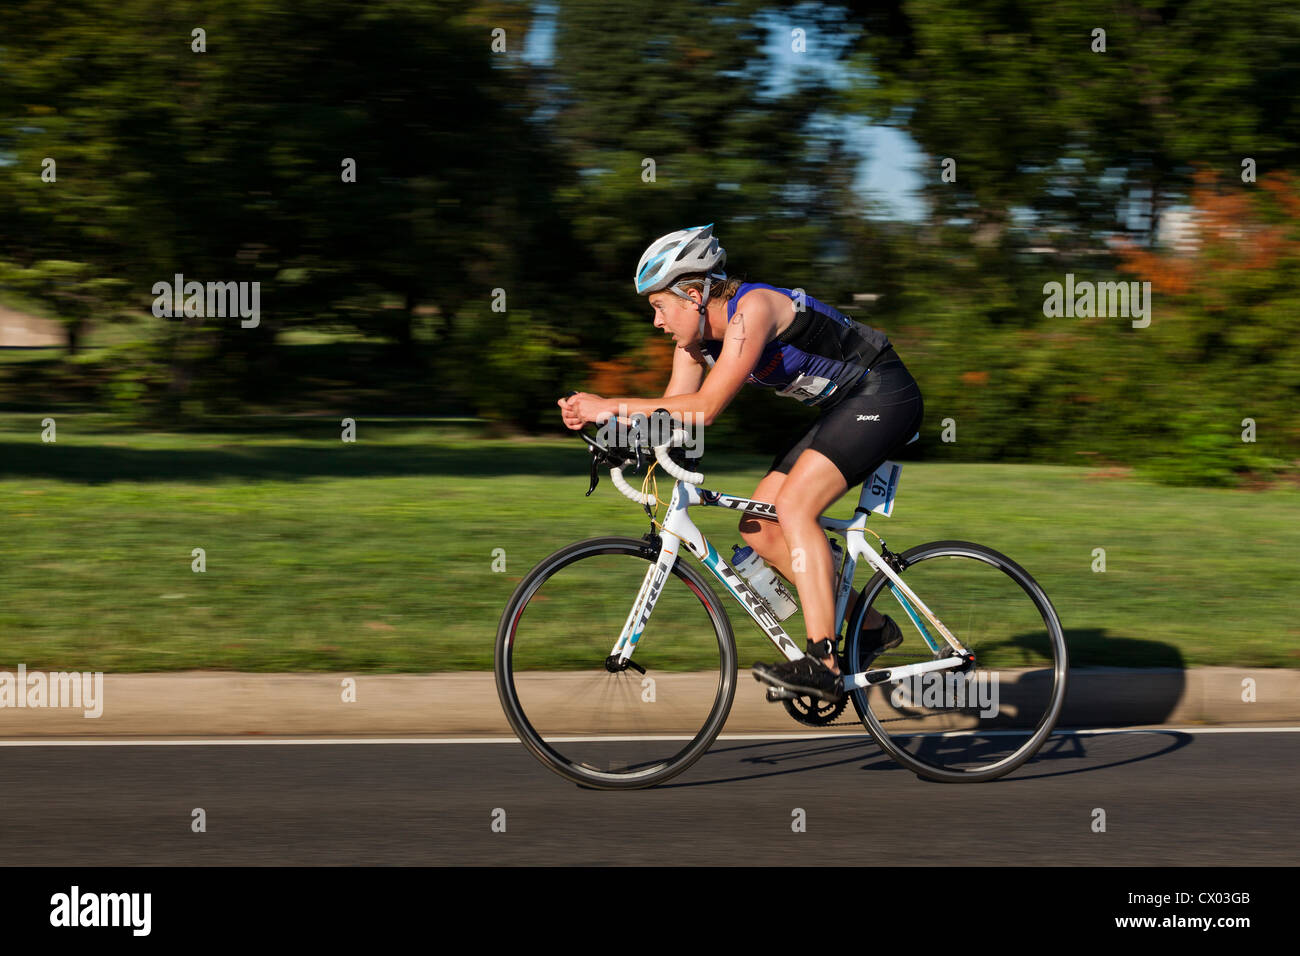 Female cyclist racing in bike race - USA Stock Photo